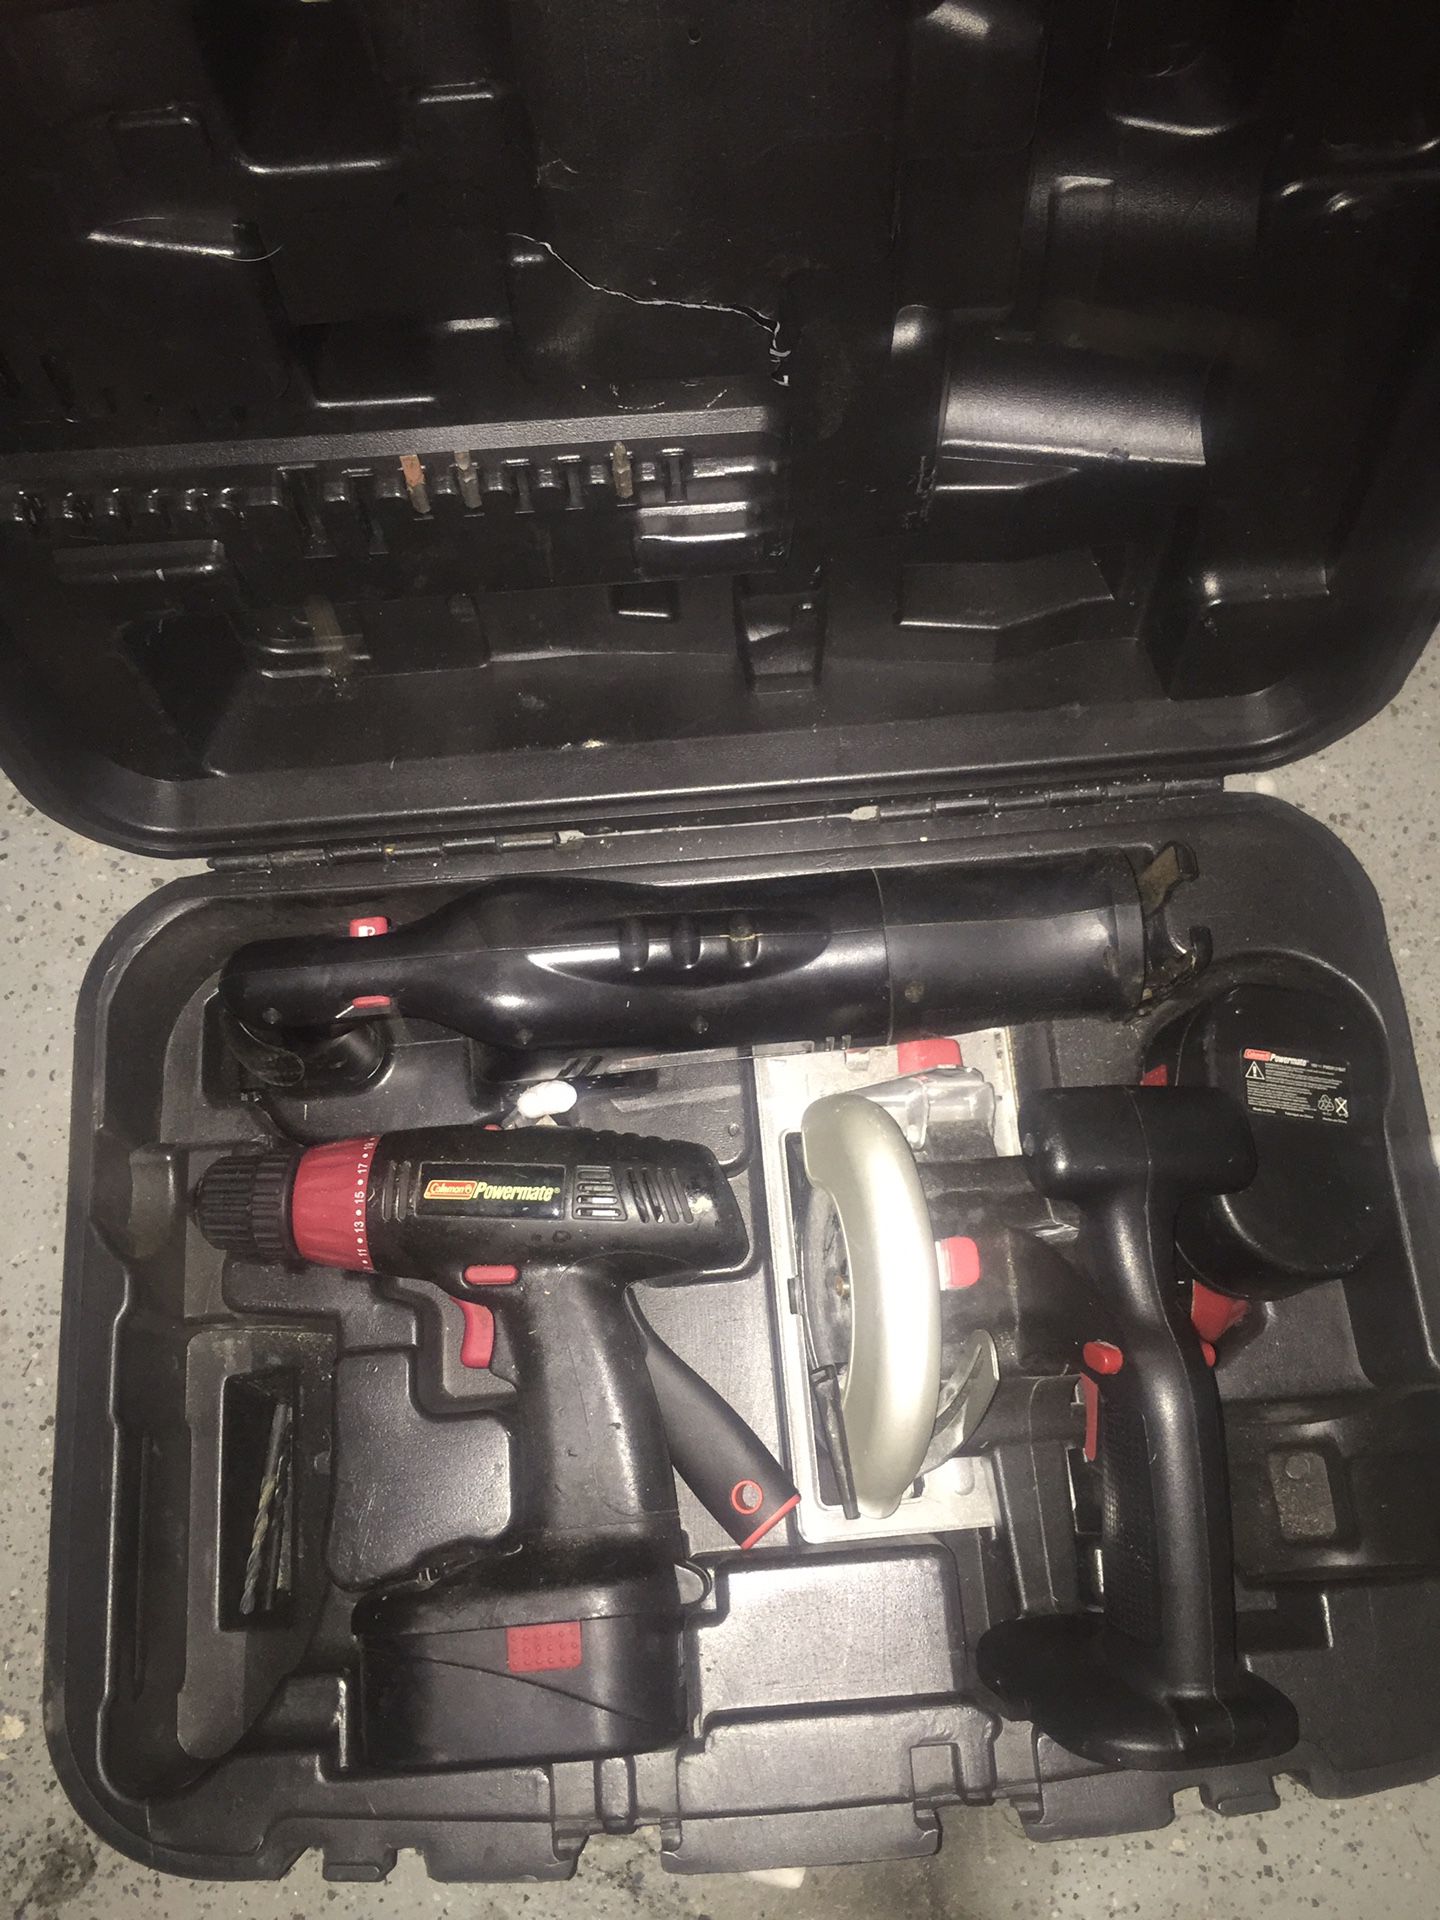 Coleman Power tool set in case